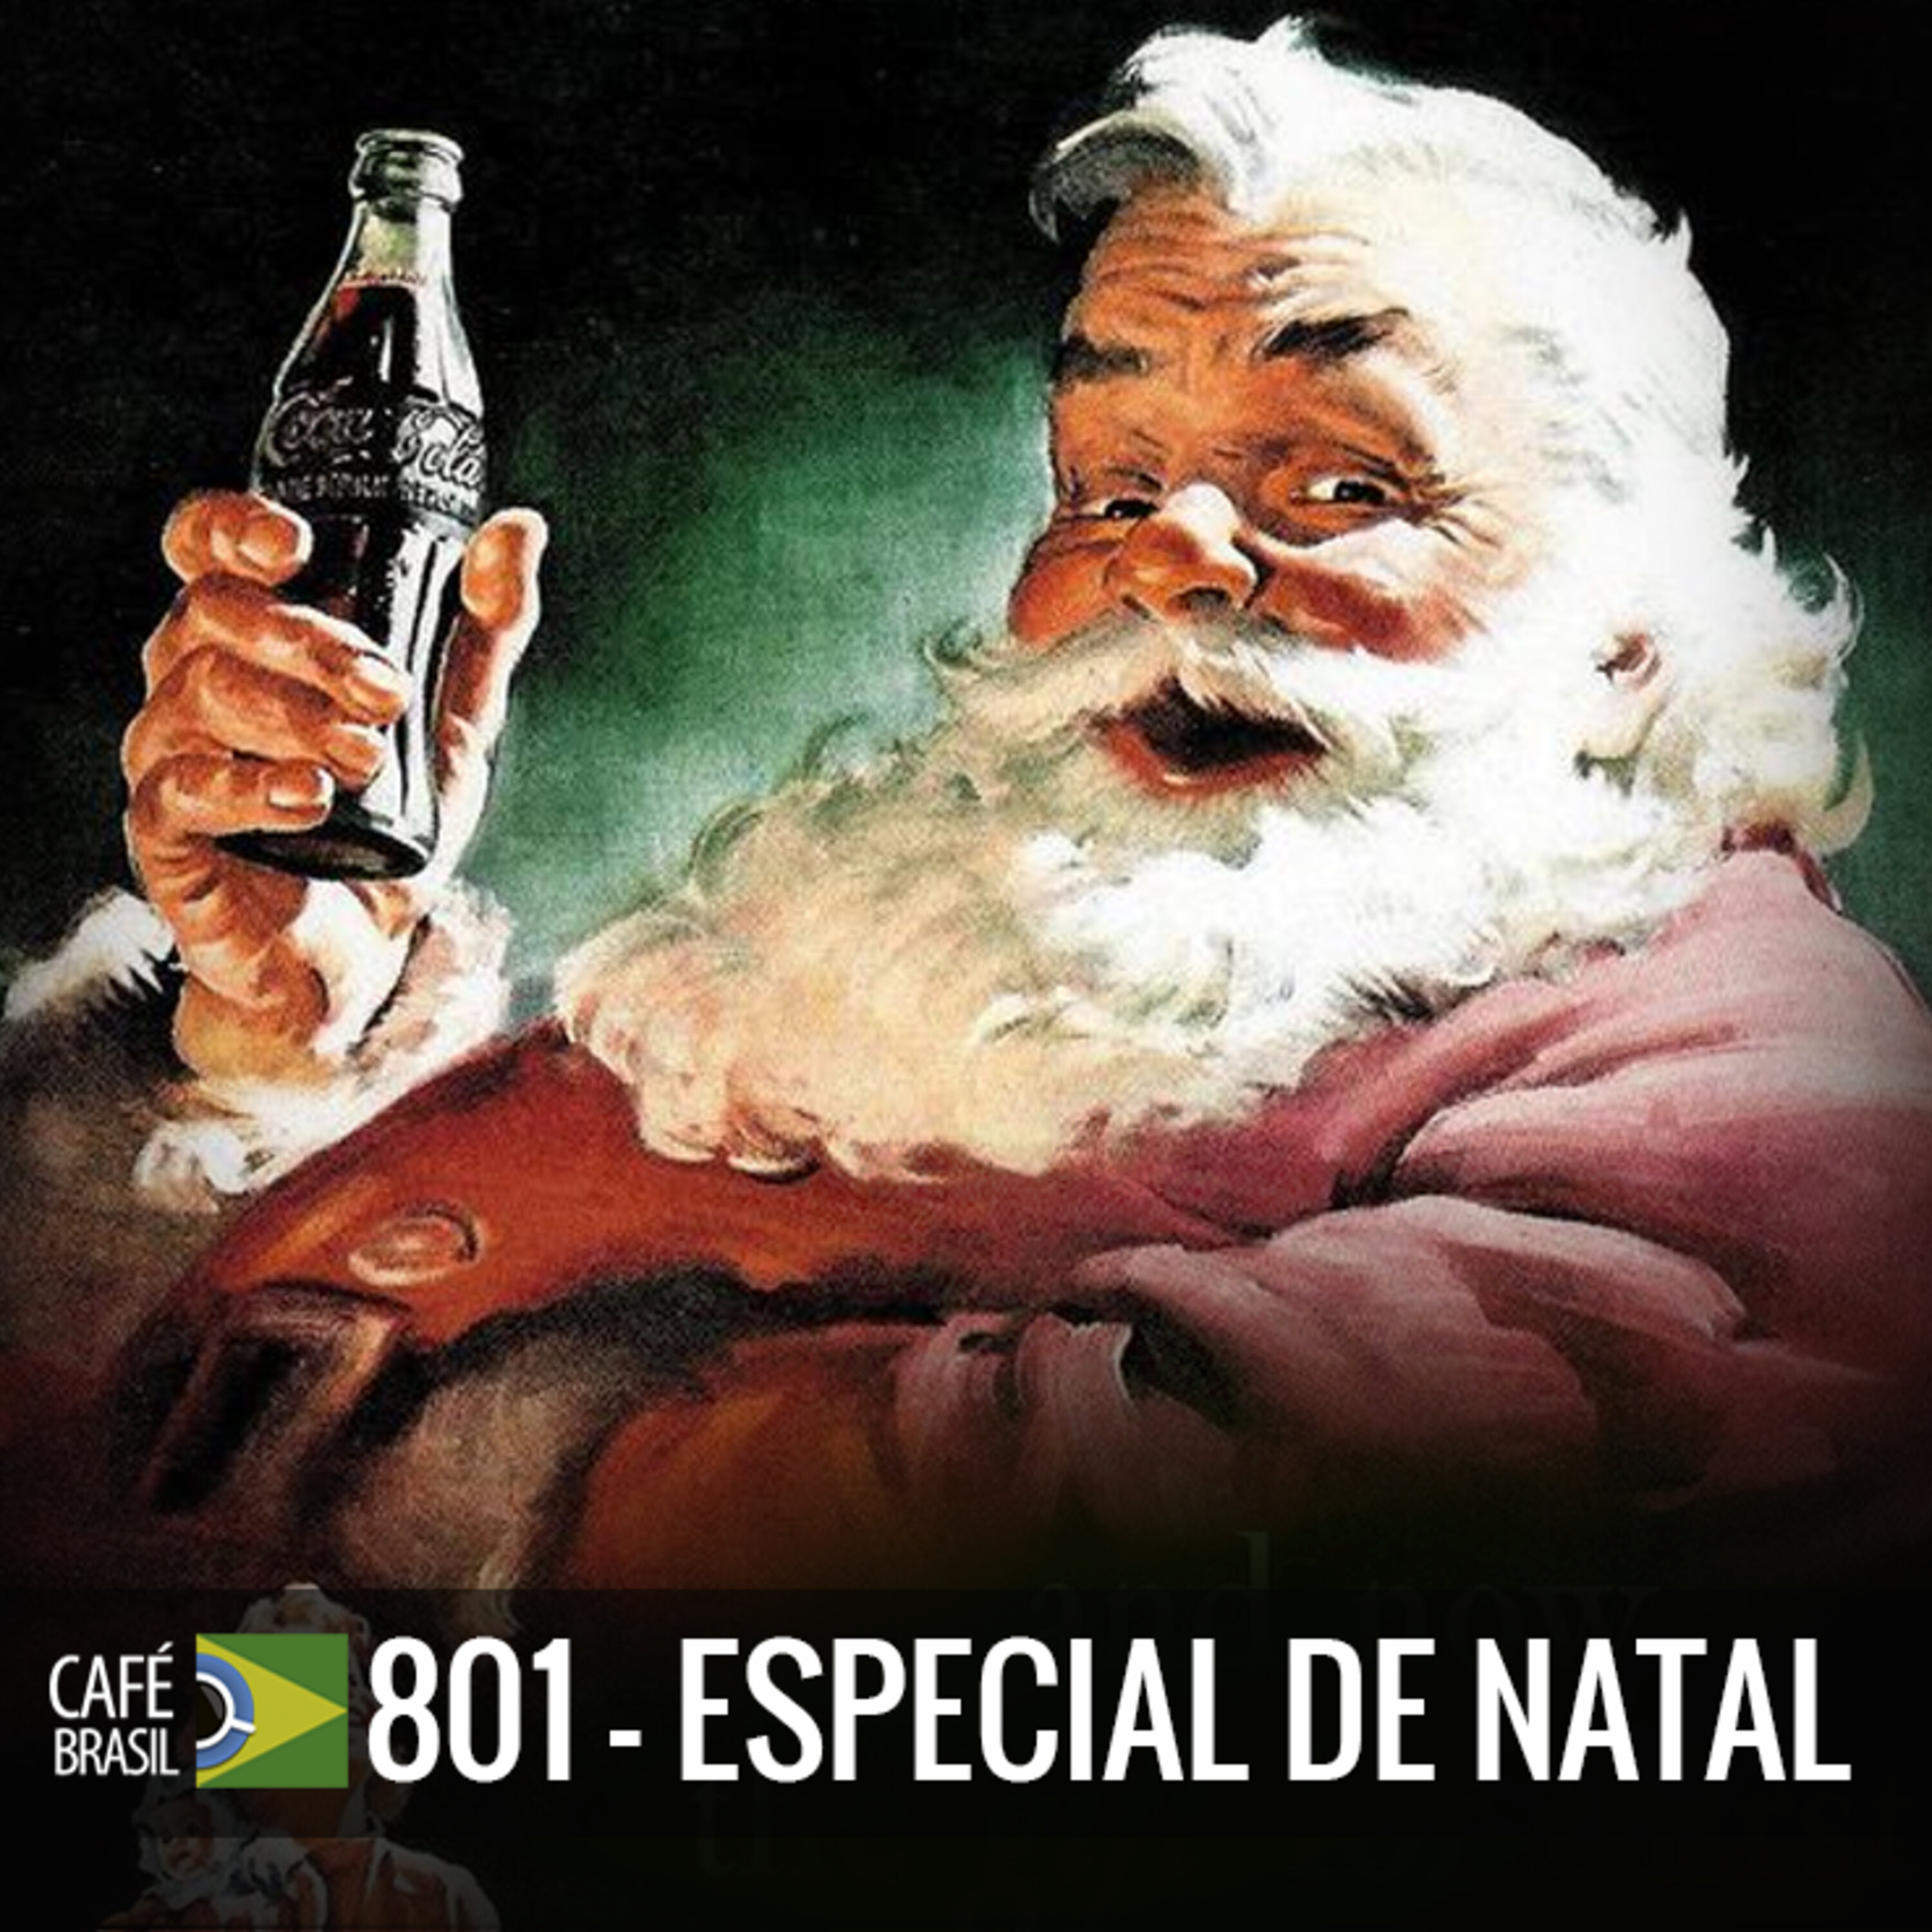 Cafe Brasil 801 - Especial de Natal